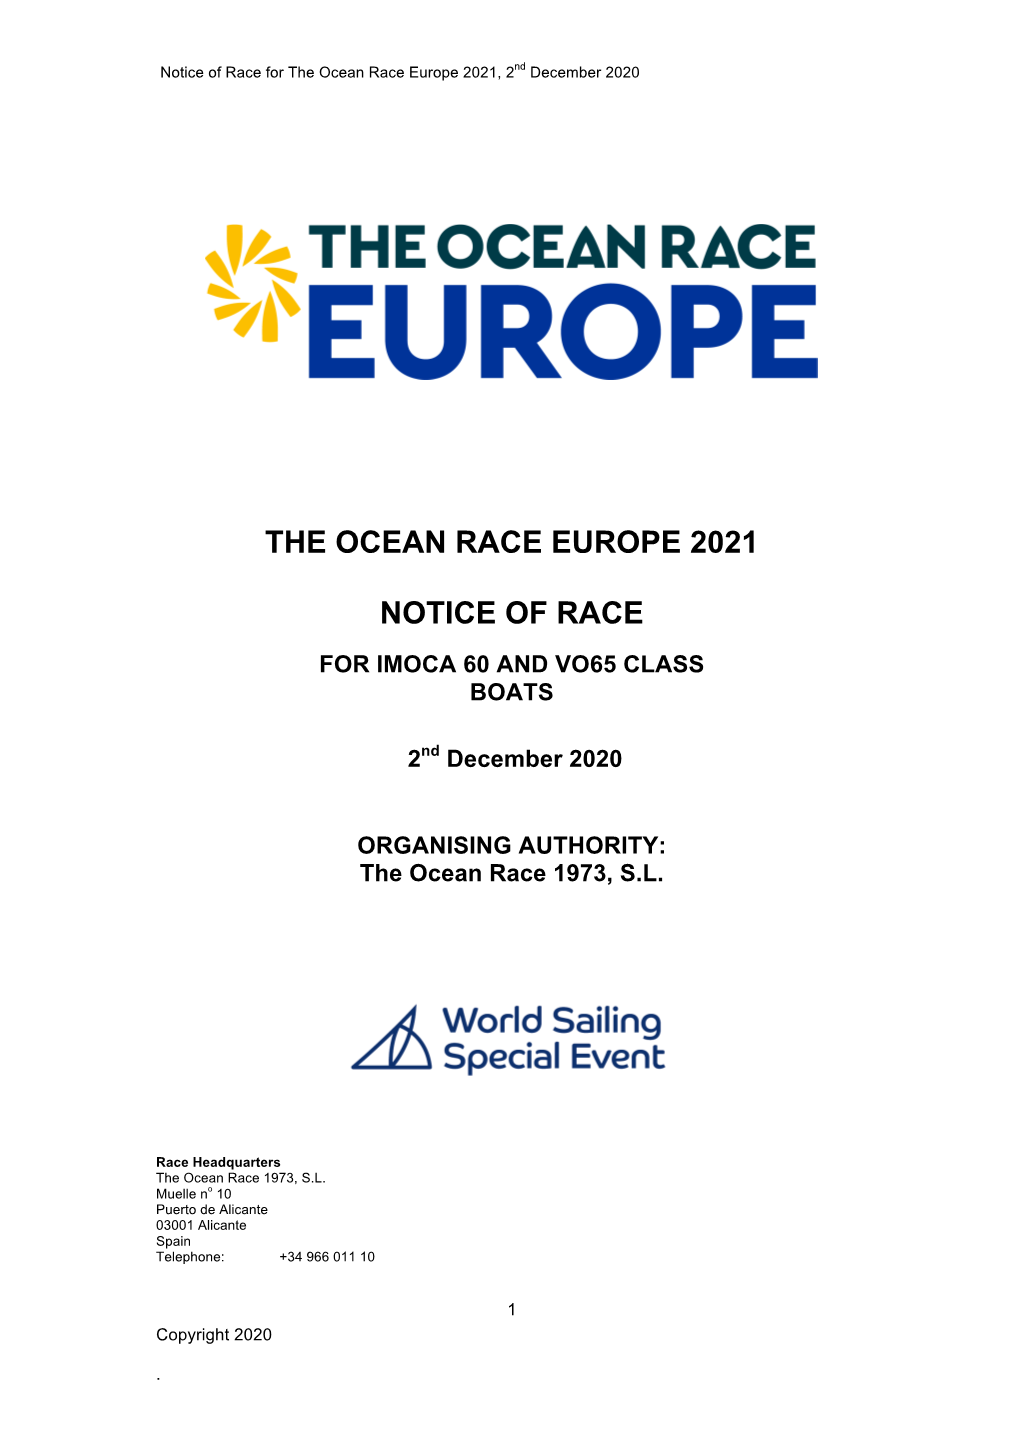 The Ocean Race Europe 2021 Notice of Race